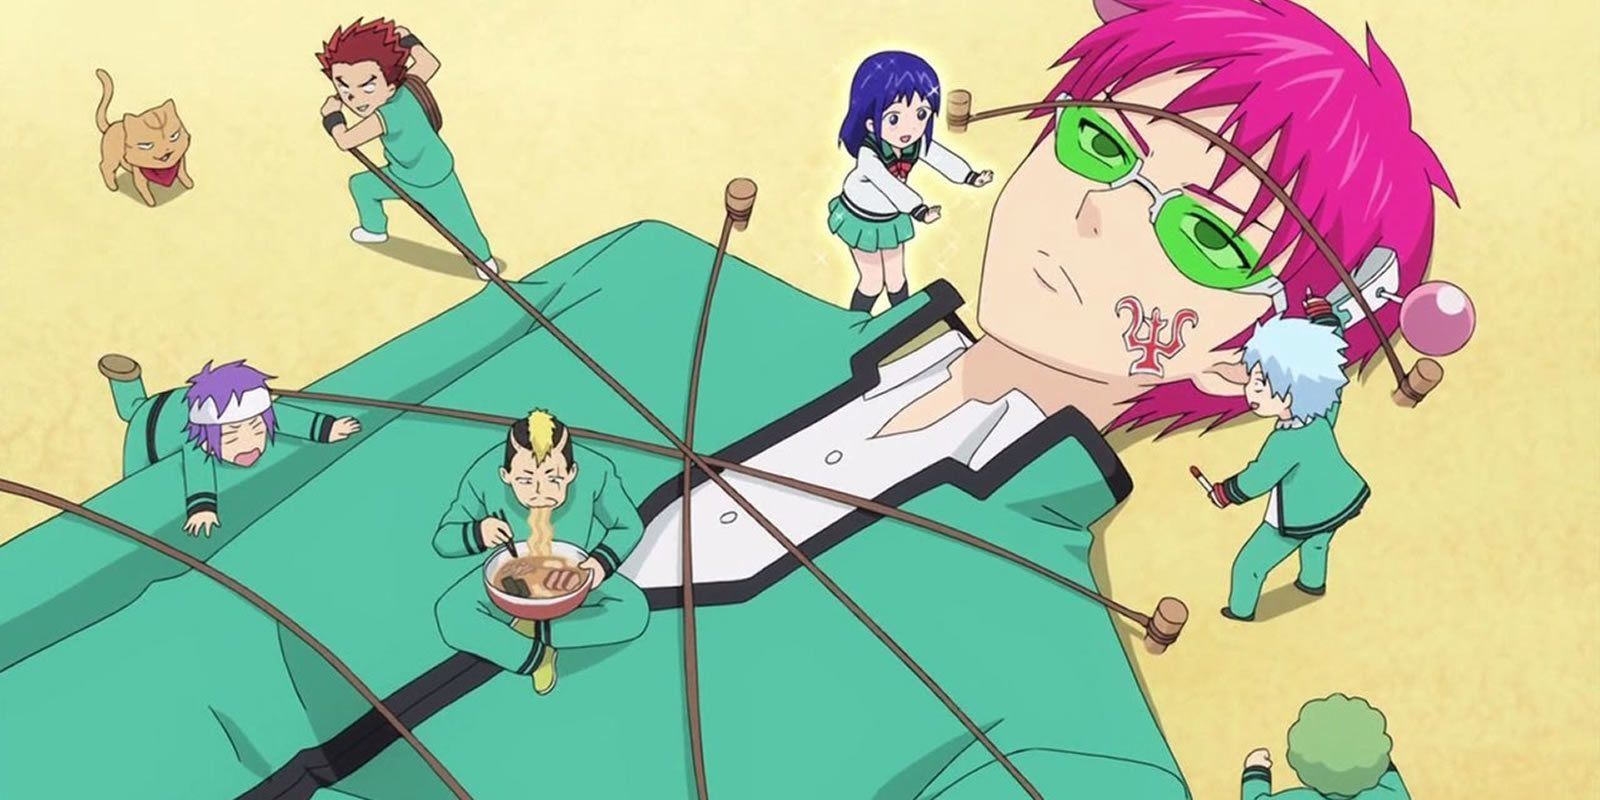 saiki k anime visual showing a Gulliver's travel parody of Saiki tied down with his classmates around him